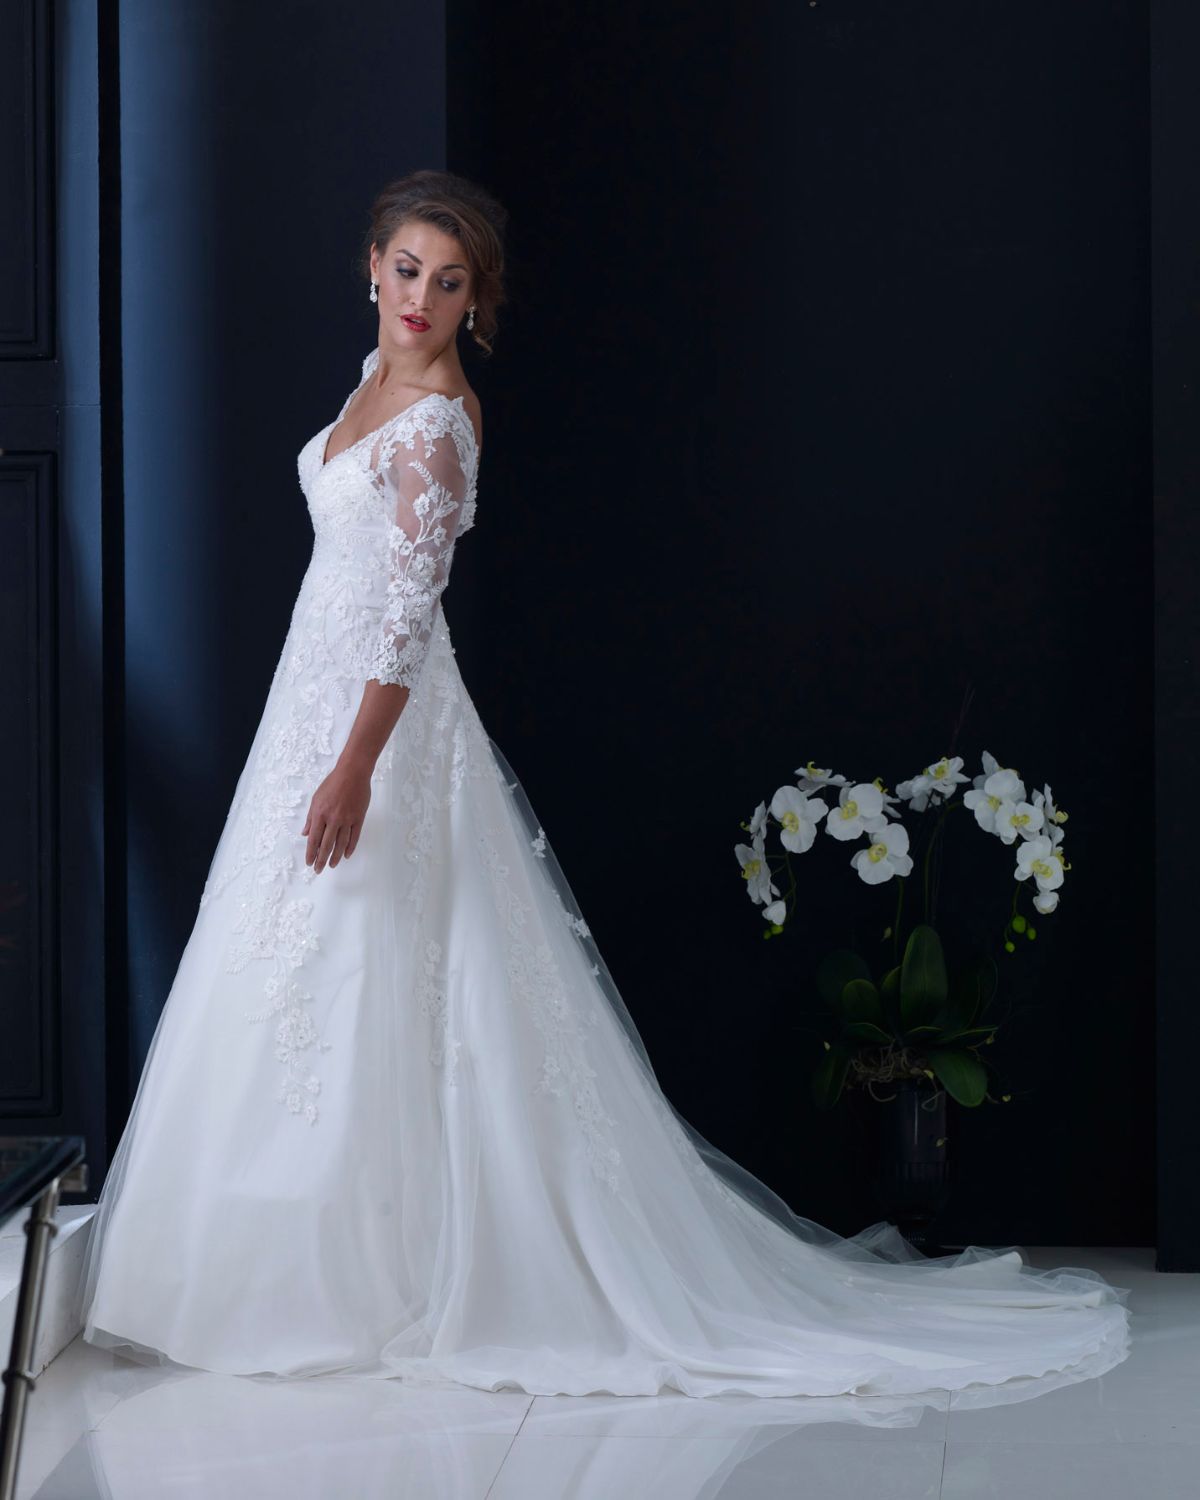 Best Dress 2 Impress Bridal-Image-86